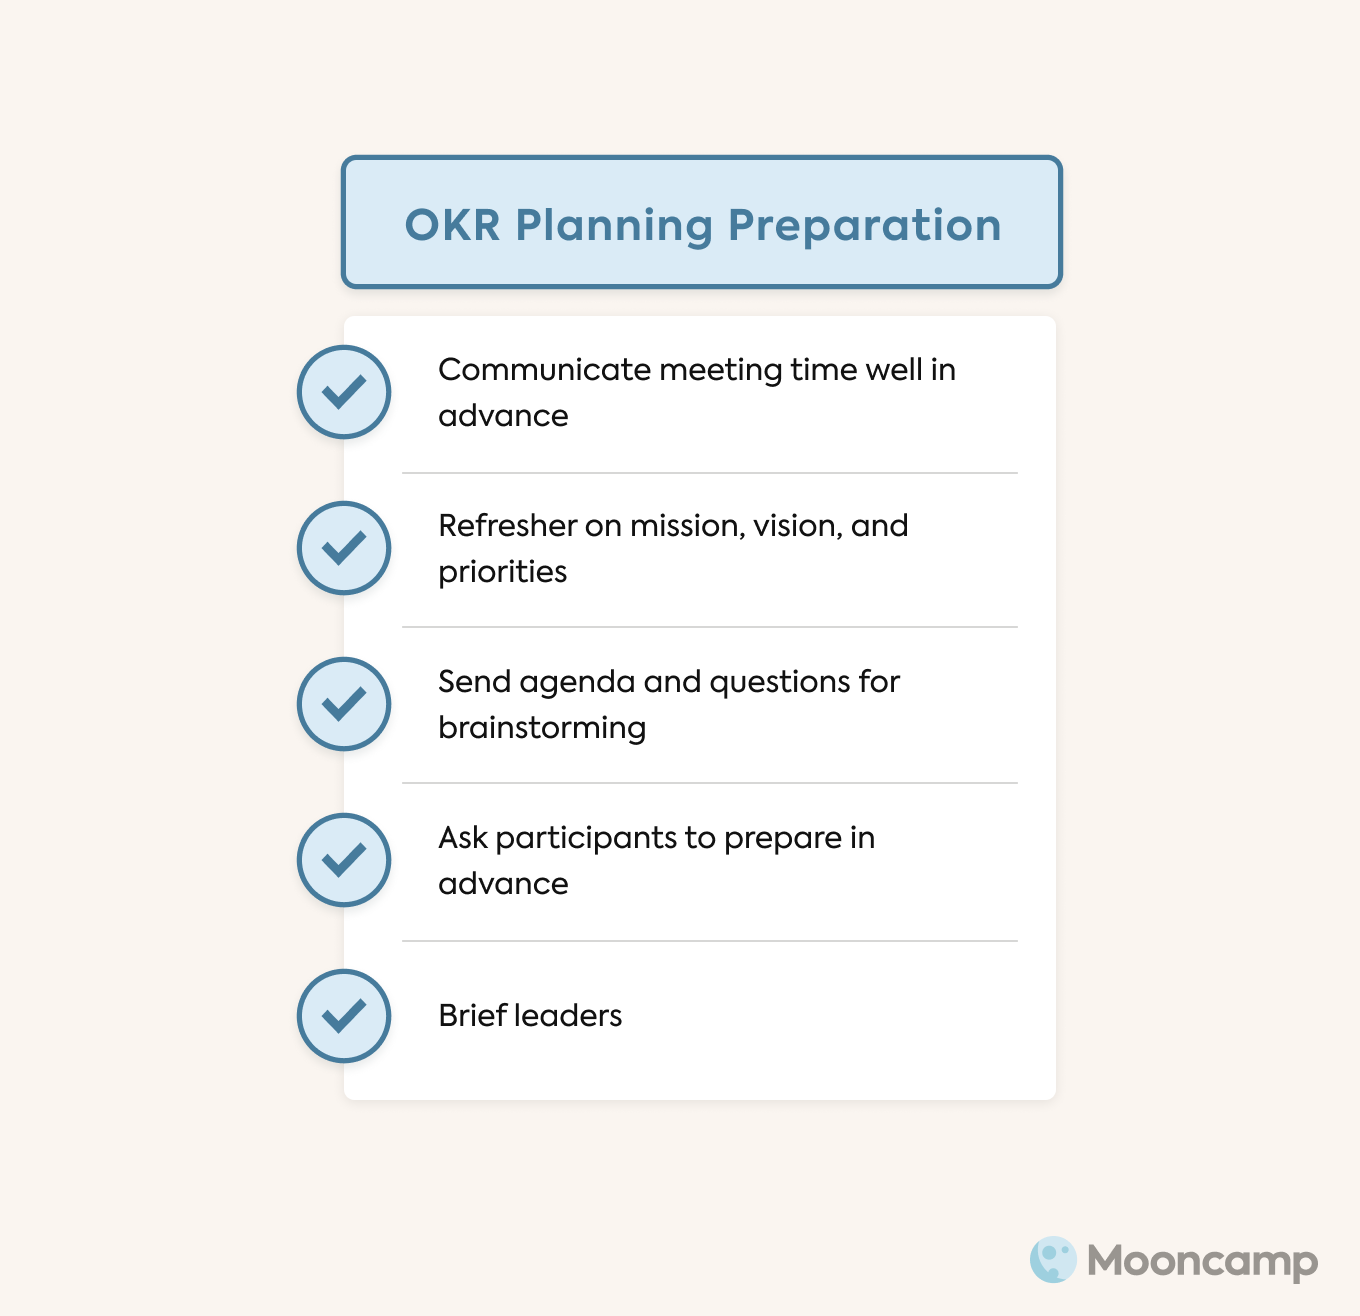 OKR Planning preparation